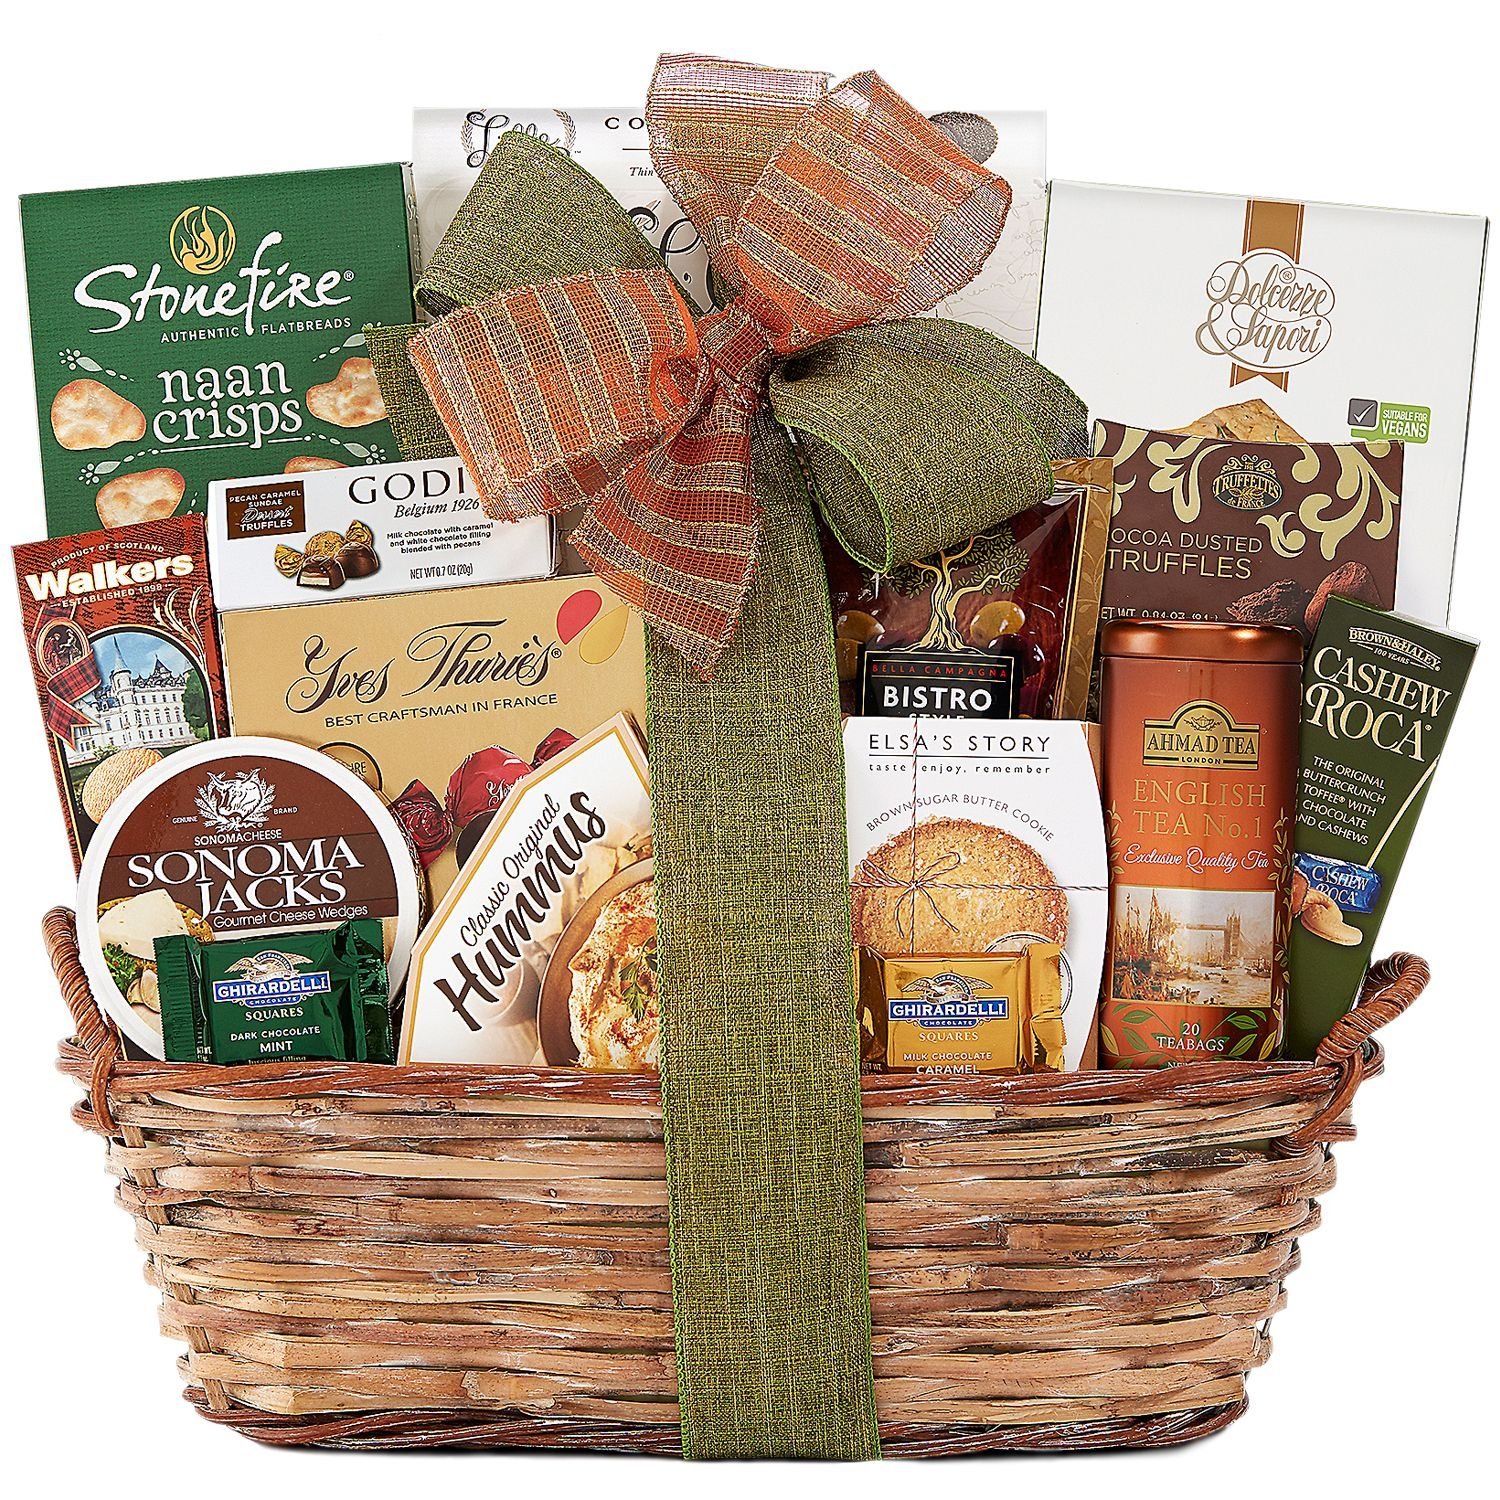 Amazon.com : Gluten Free Gift Basket : Gourmet Snacks And ...